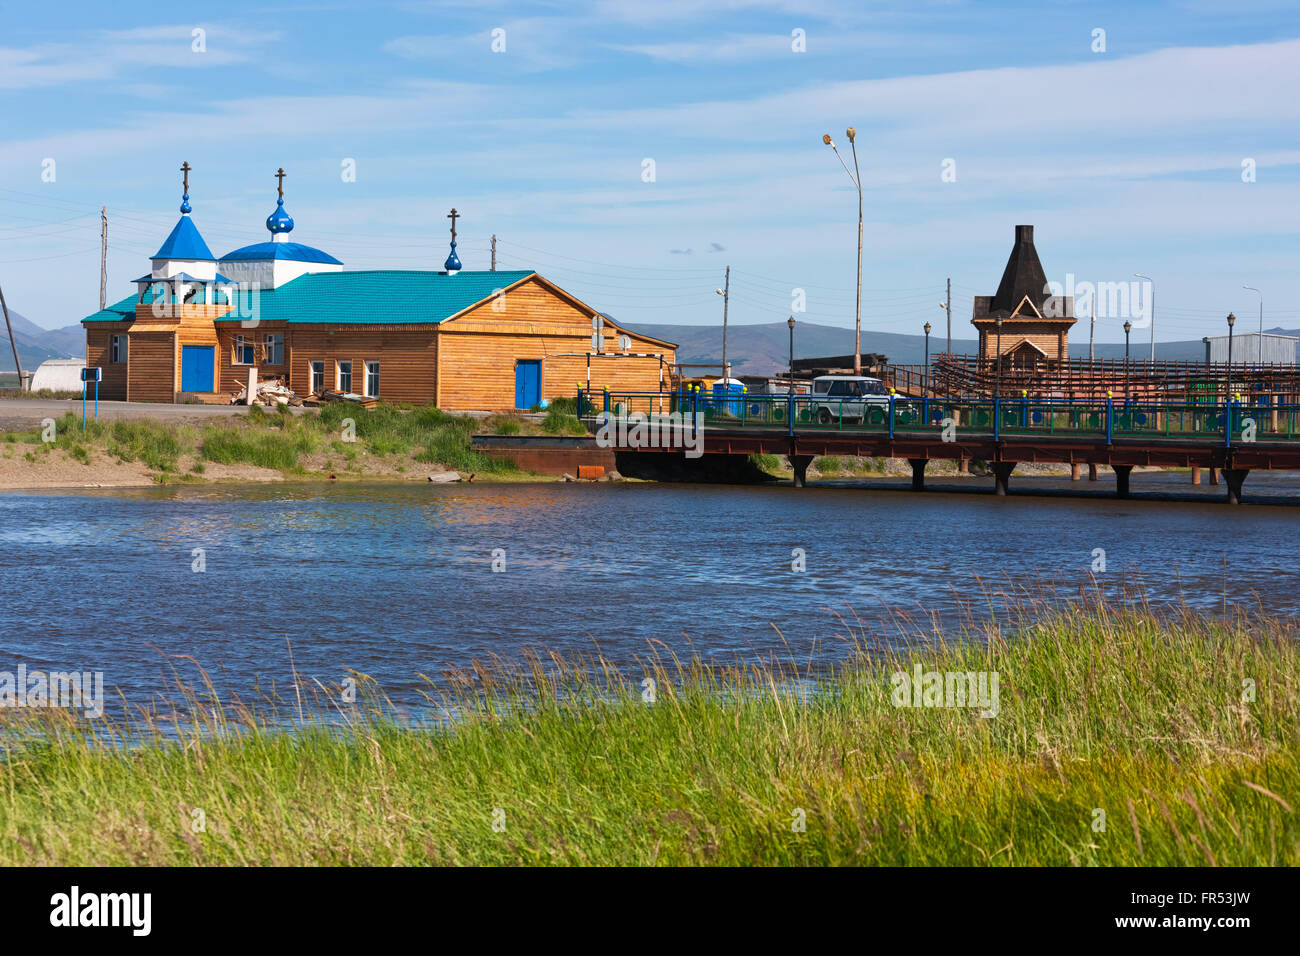 Nuova chiesa da Anadry Rive,r Anadyr, Chukotka Okrug autonomo, Russia Foto Stock